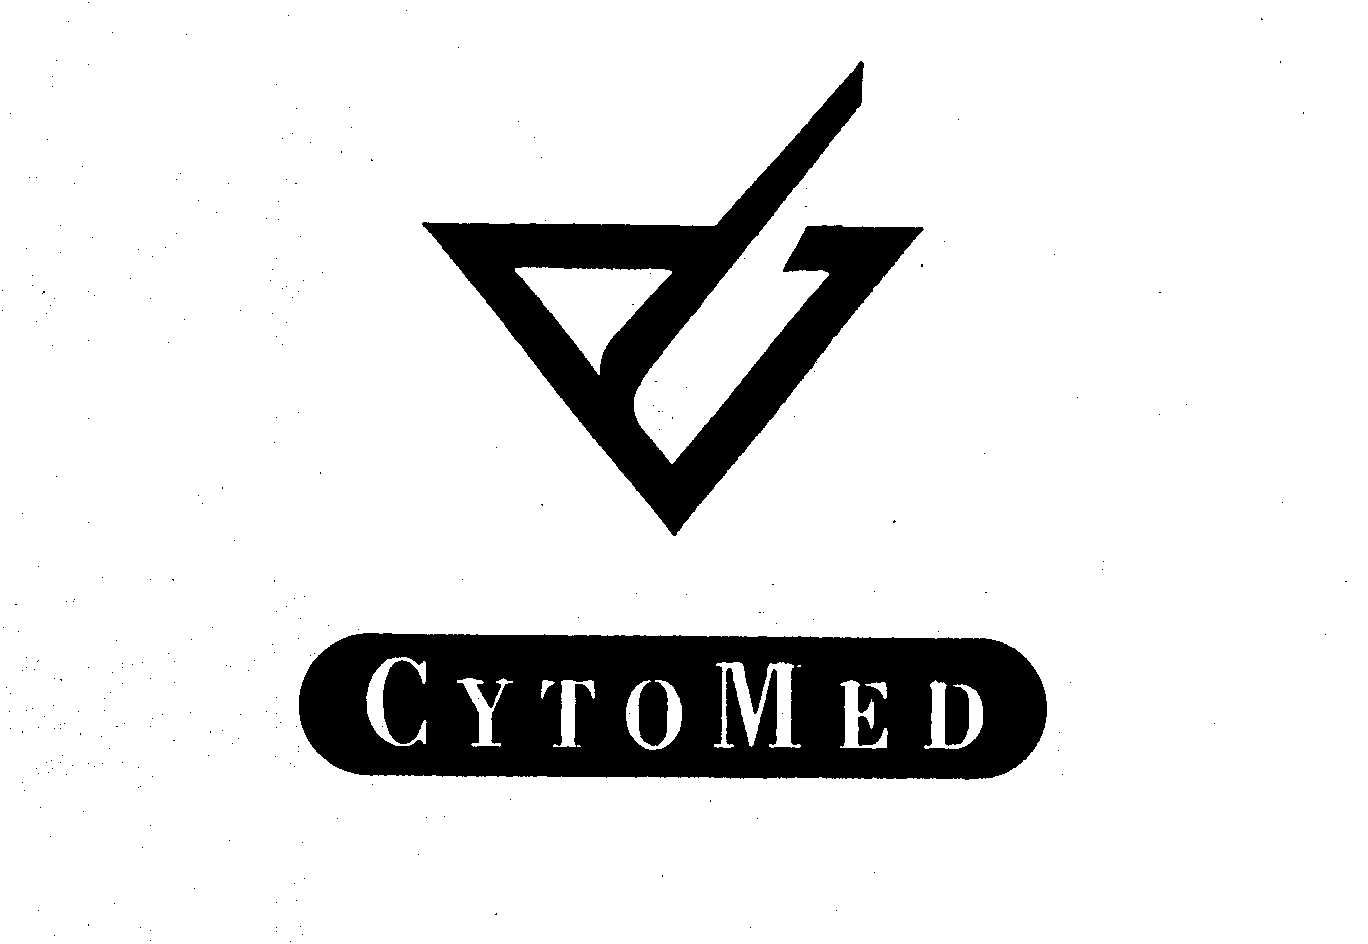  CYTOMED